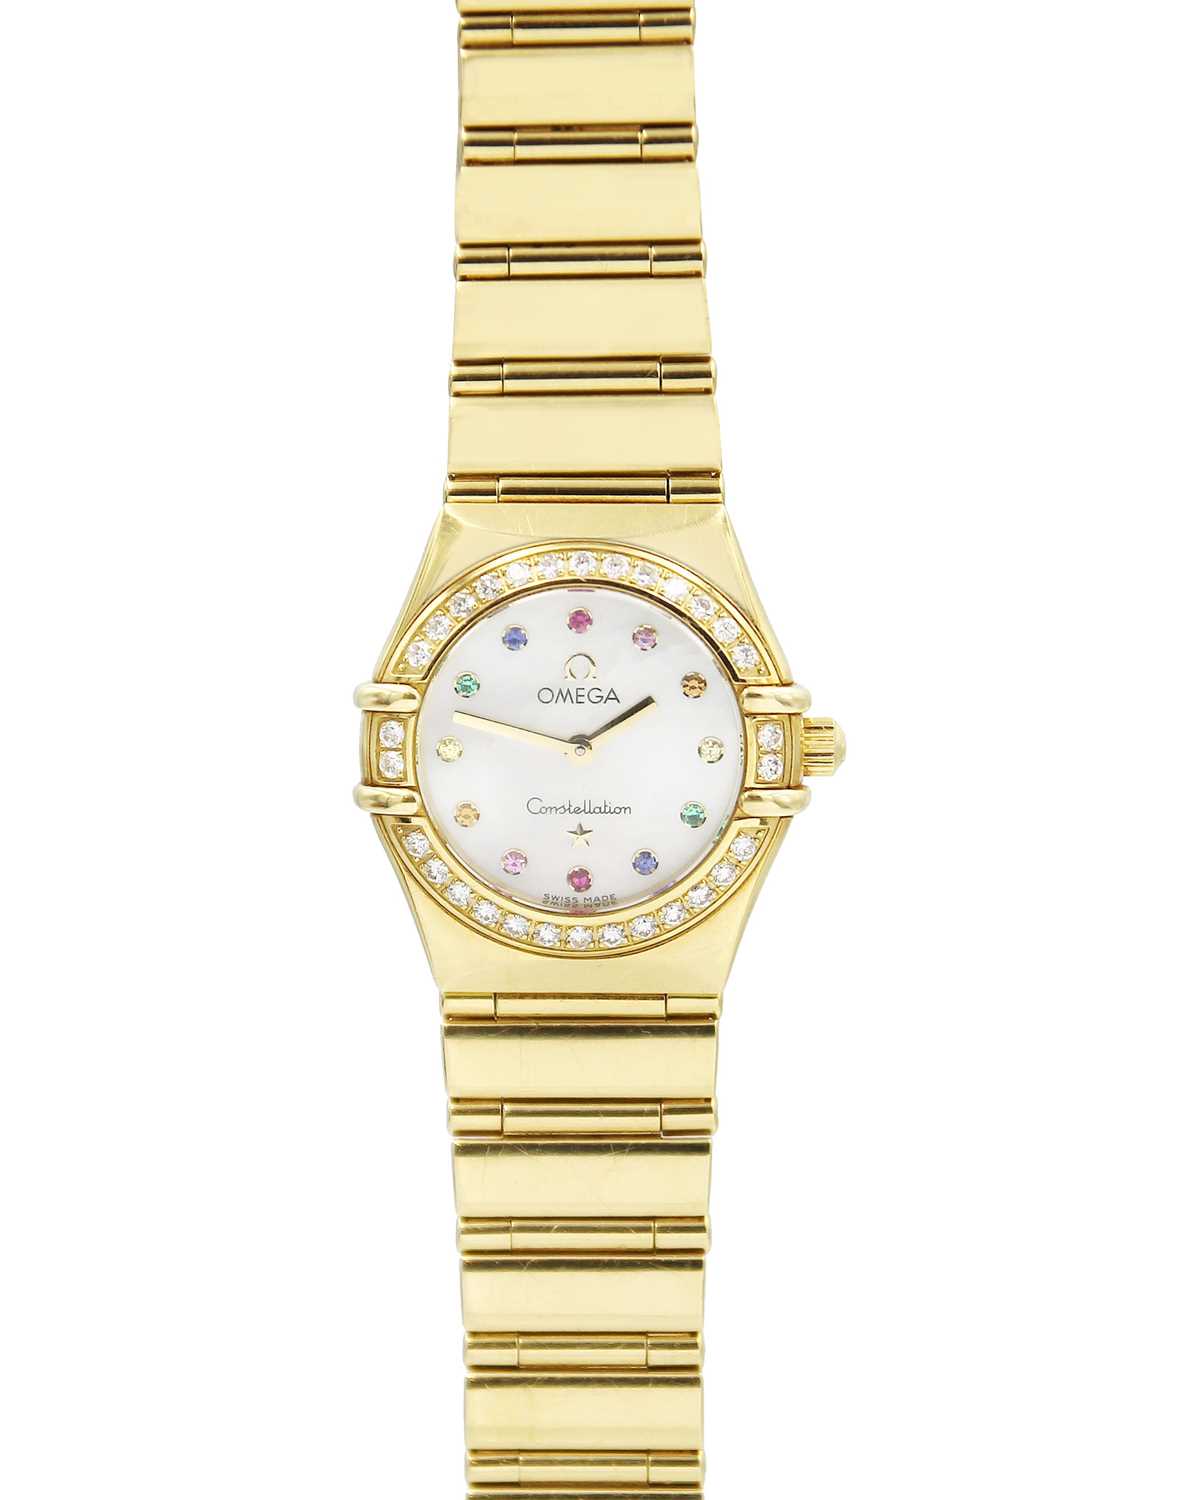 Lot 140 - OMEGA - An 18ct Constellation 'Iris My Choice' lady's quartz wristwatch with diamond-set bezel.